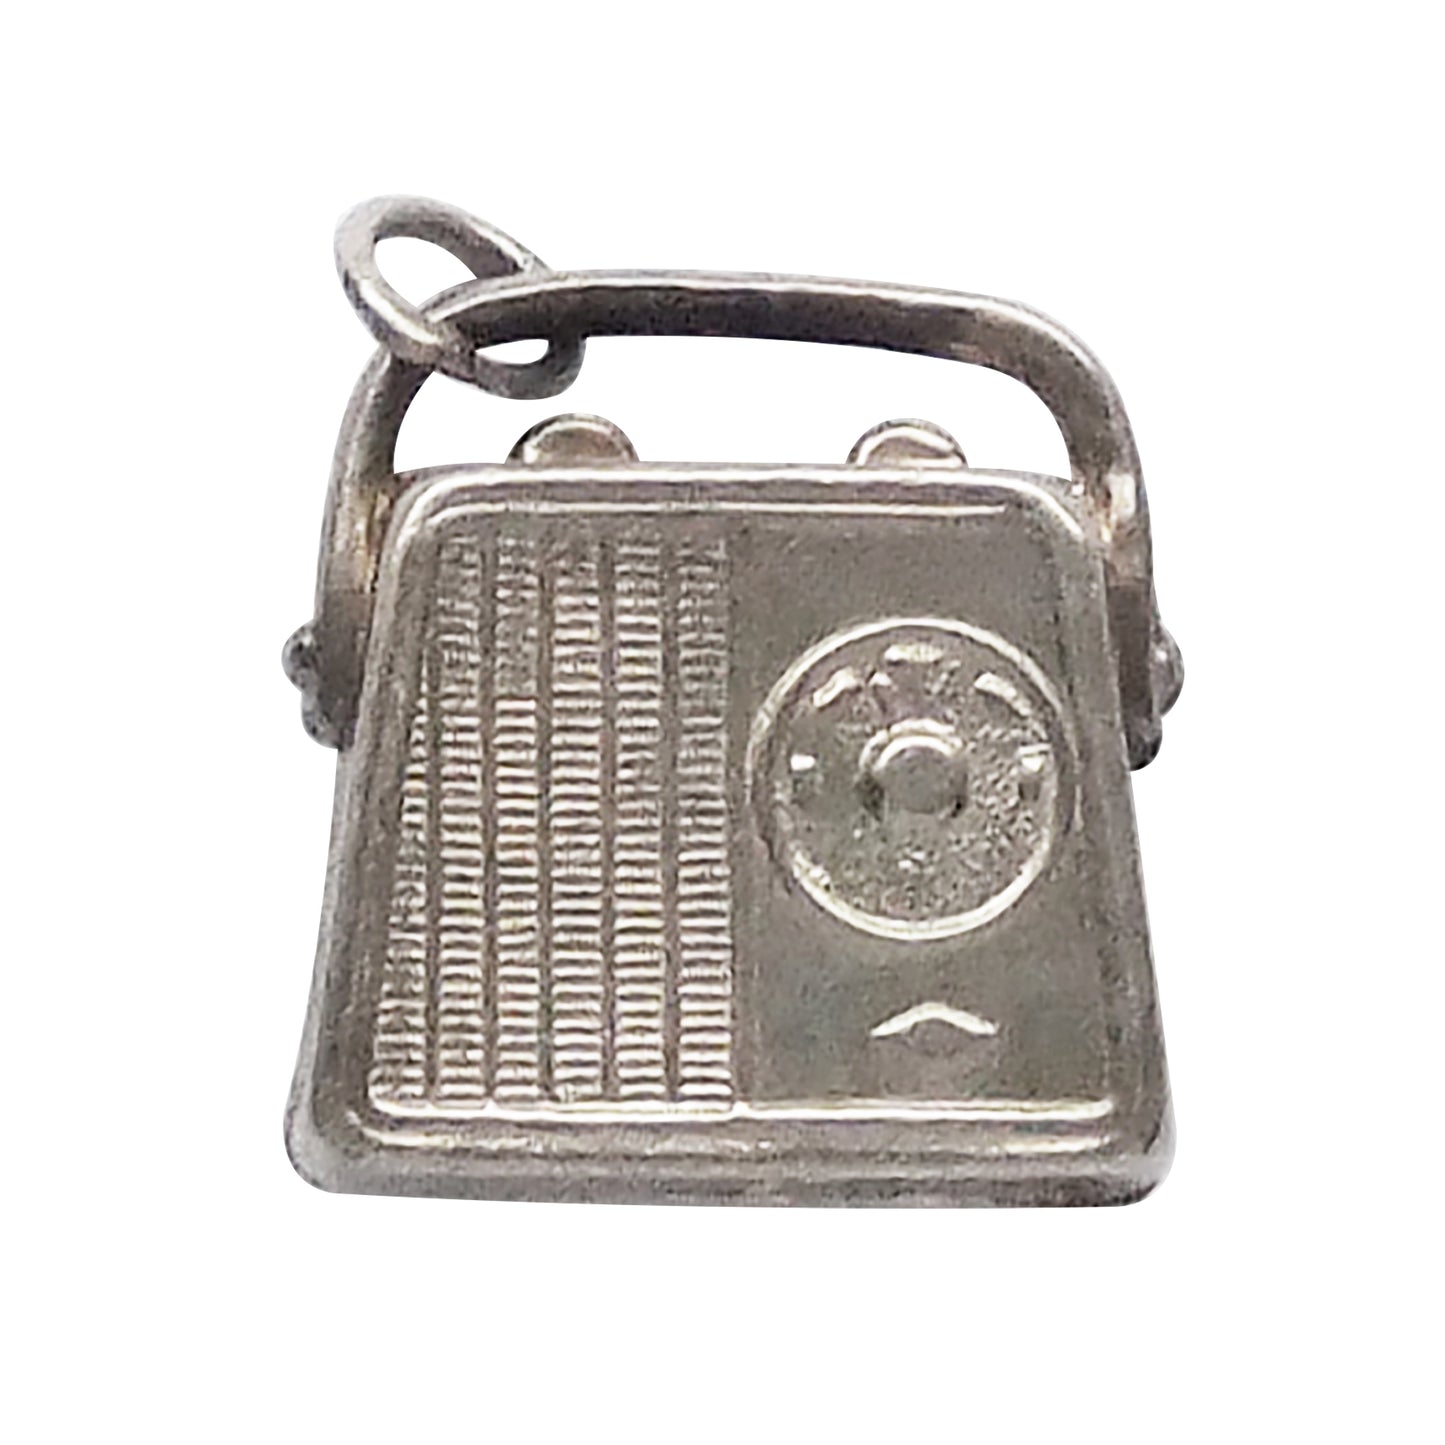 Vintage Radio Charm Sterling Silver